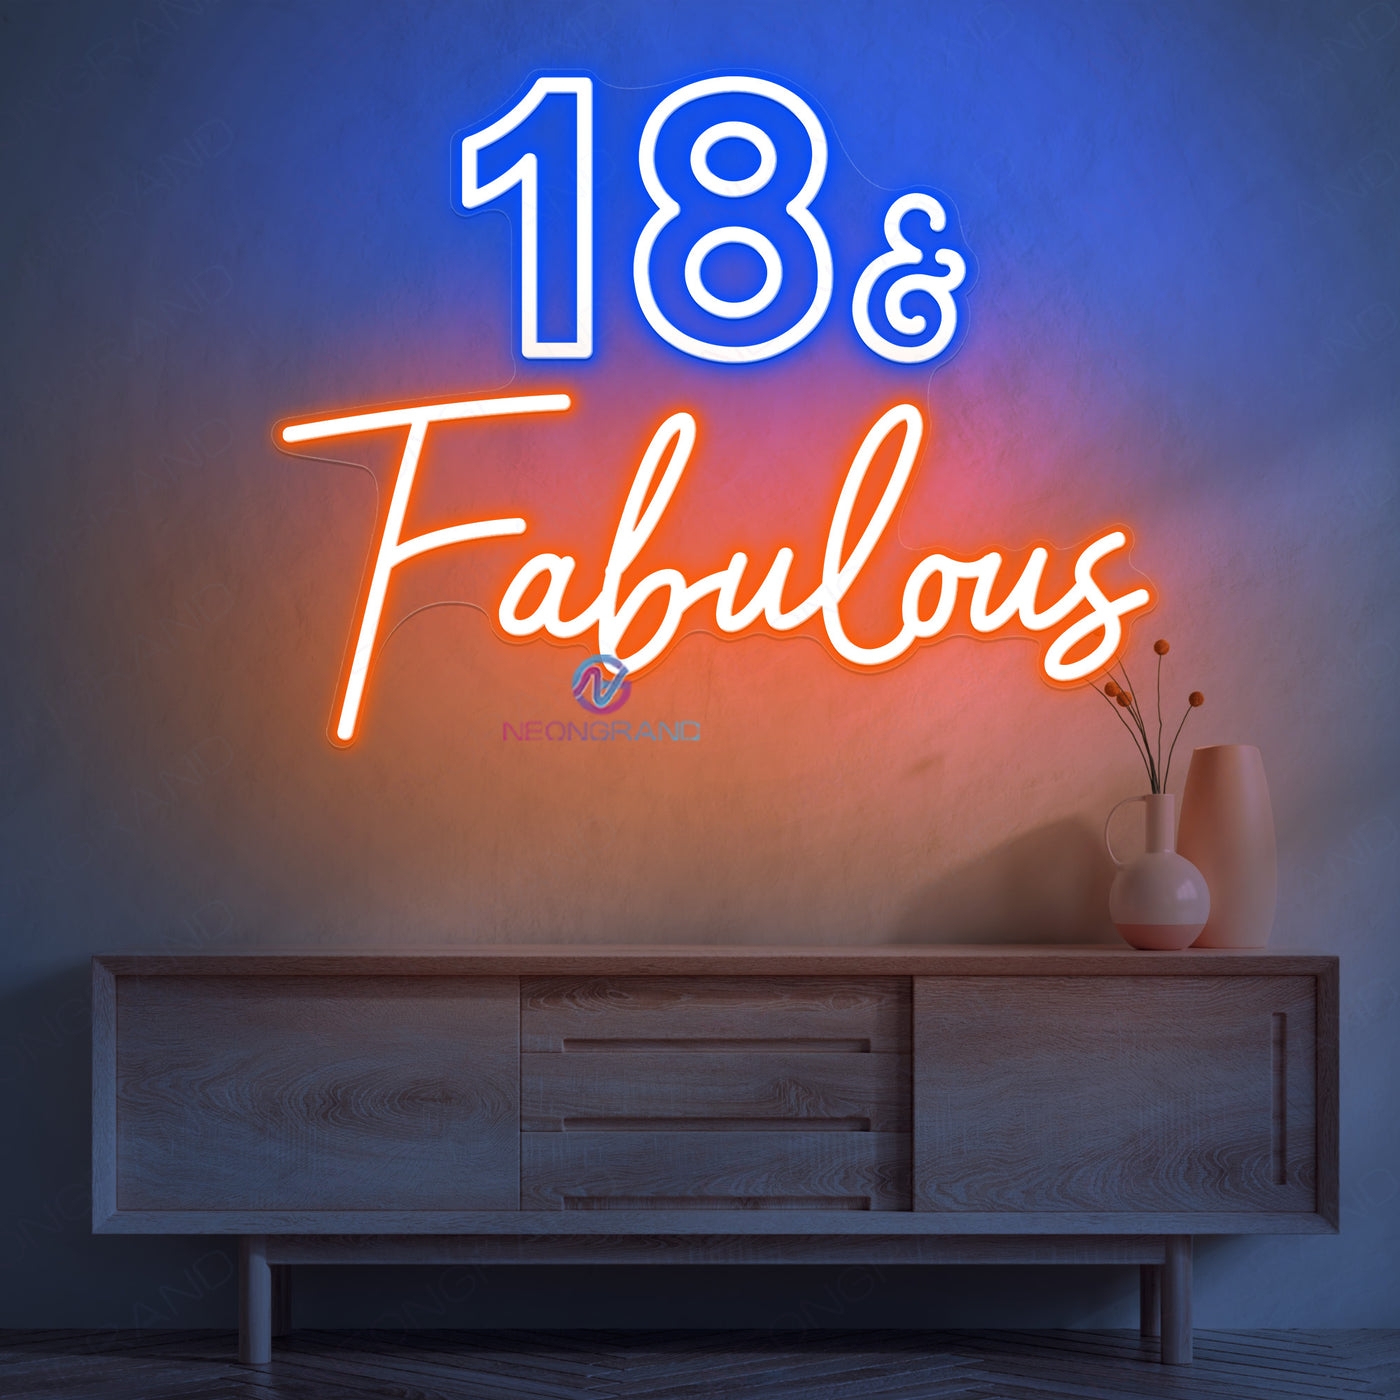 18 Fabulous Neon Sign Birthday Led Light